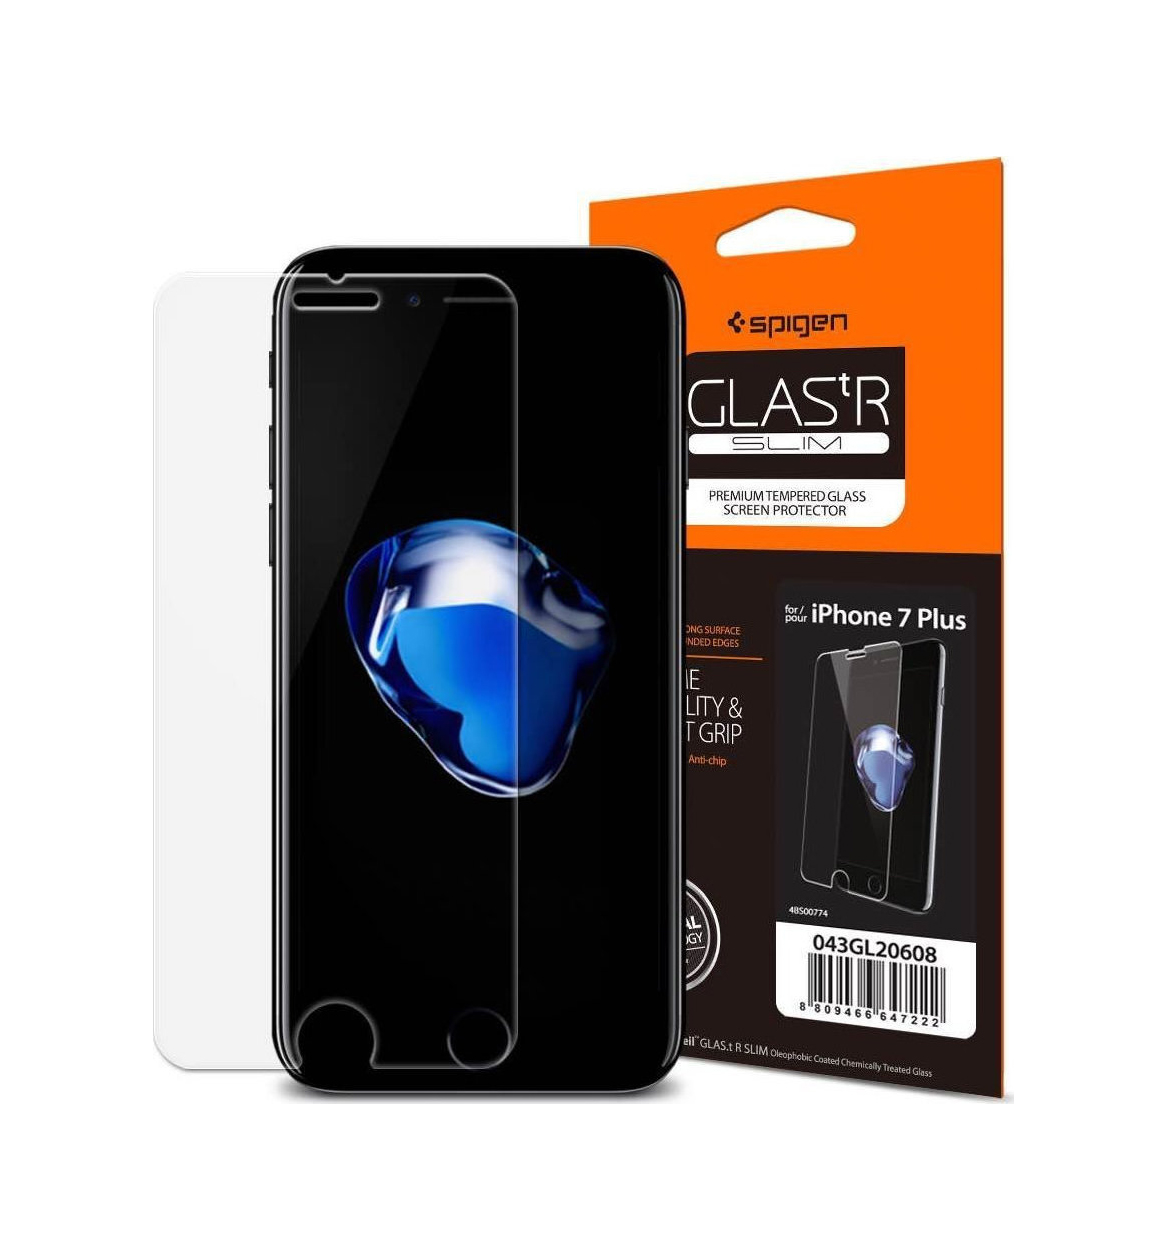 Spigen Glas.tr Slim Tempered Glass 1τμχ iPhone 8 Plus / 7 Plus 043GL20608